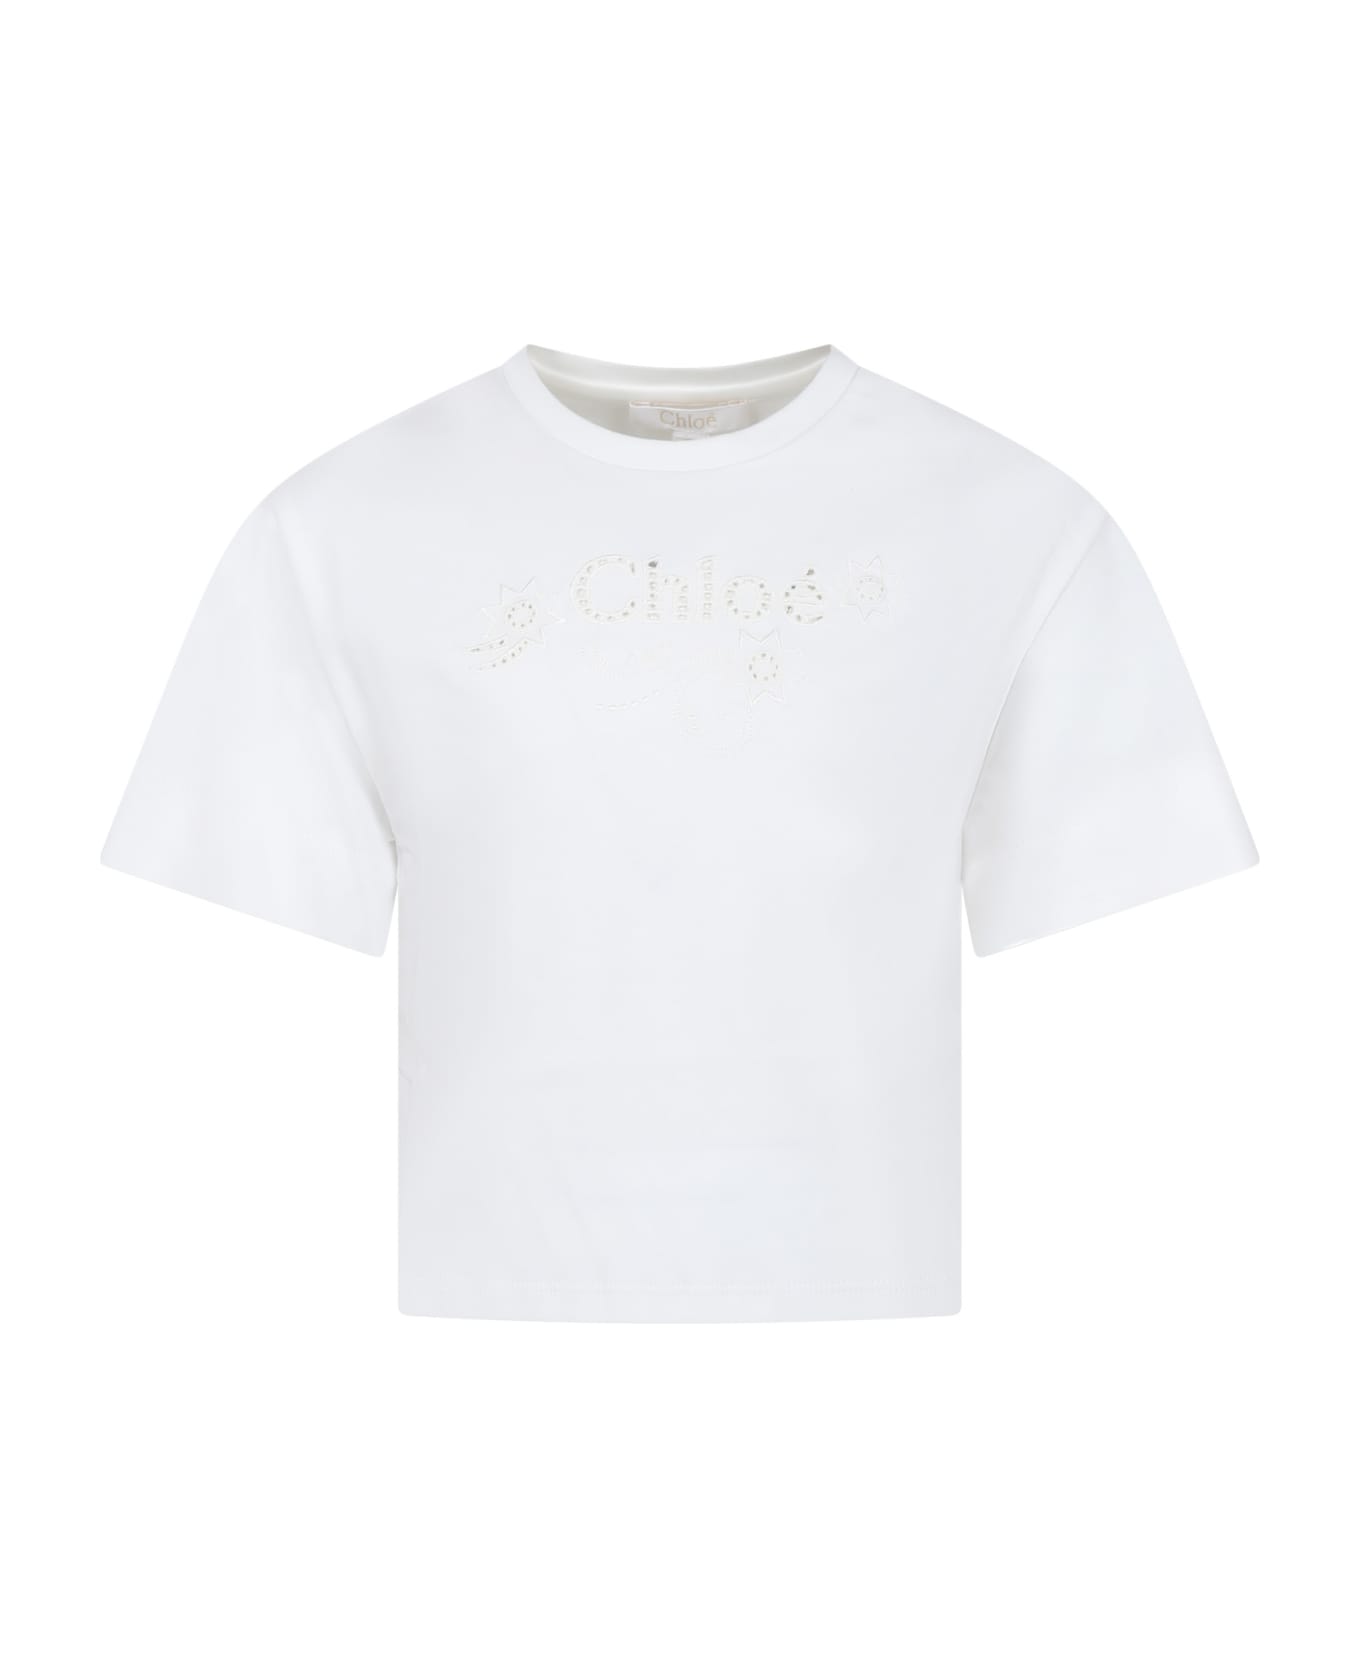 Chloé White T-shirt For Girl With Logo - White